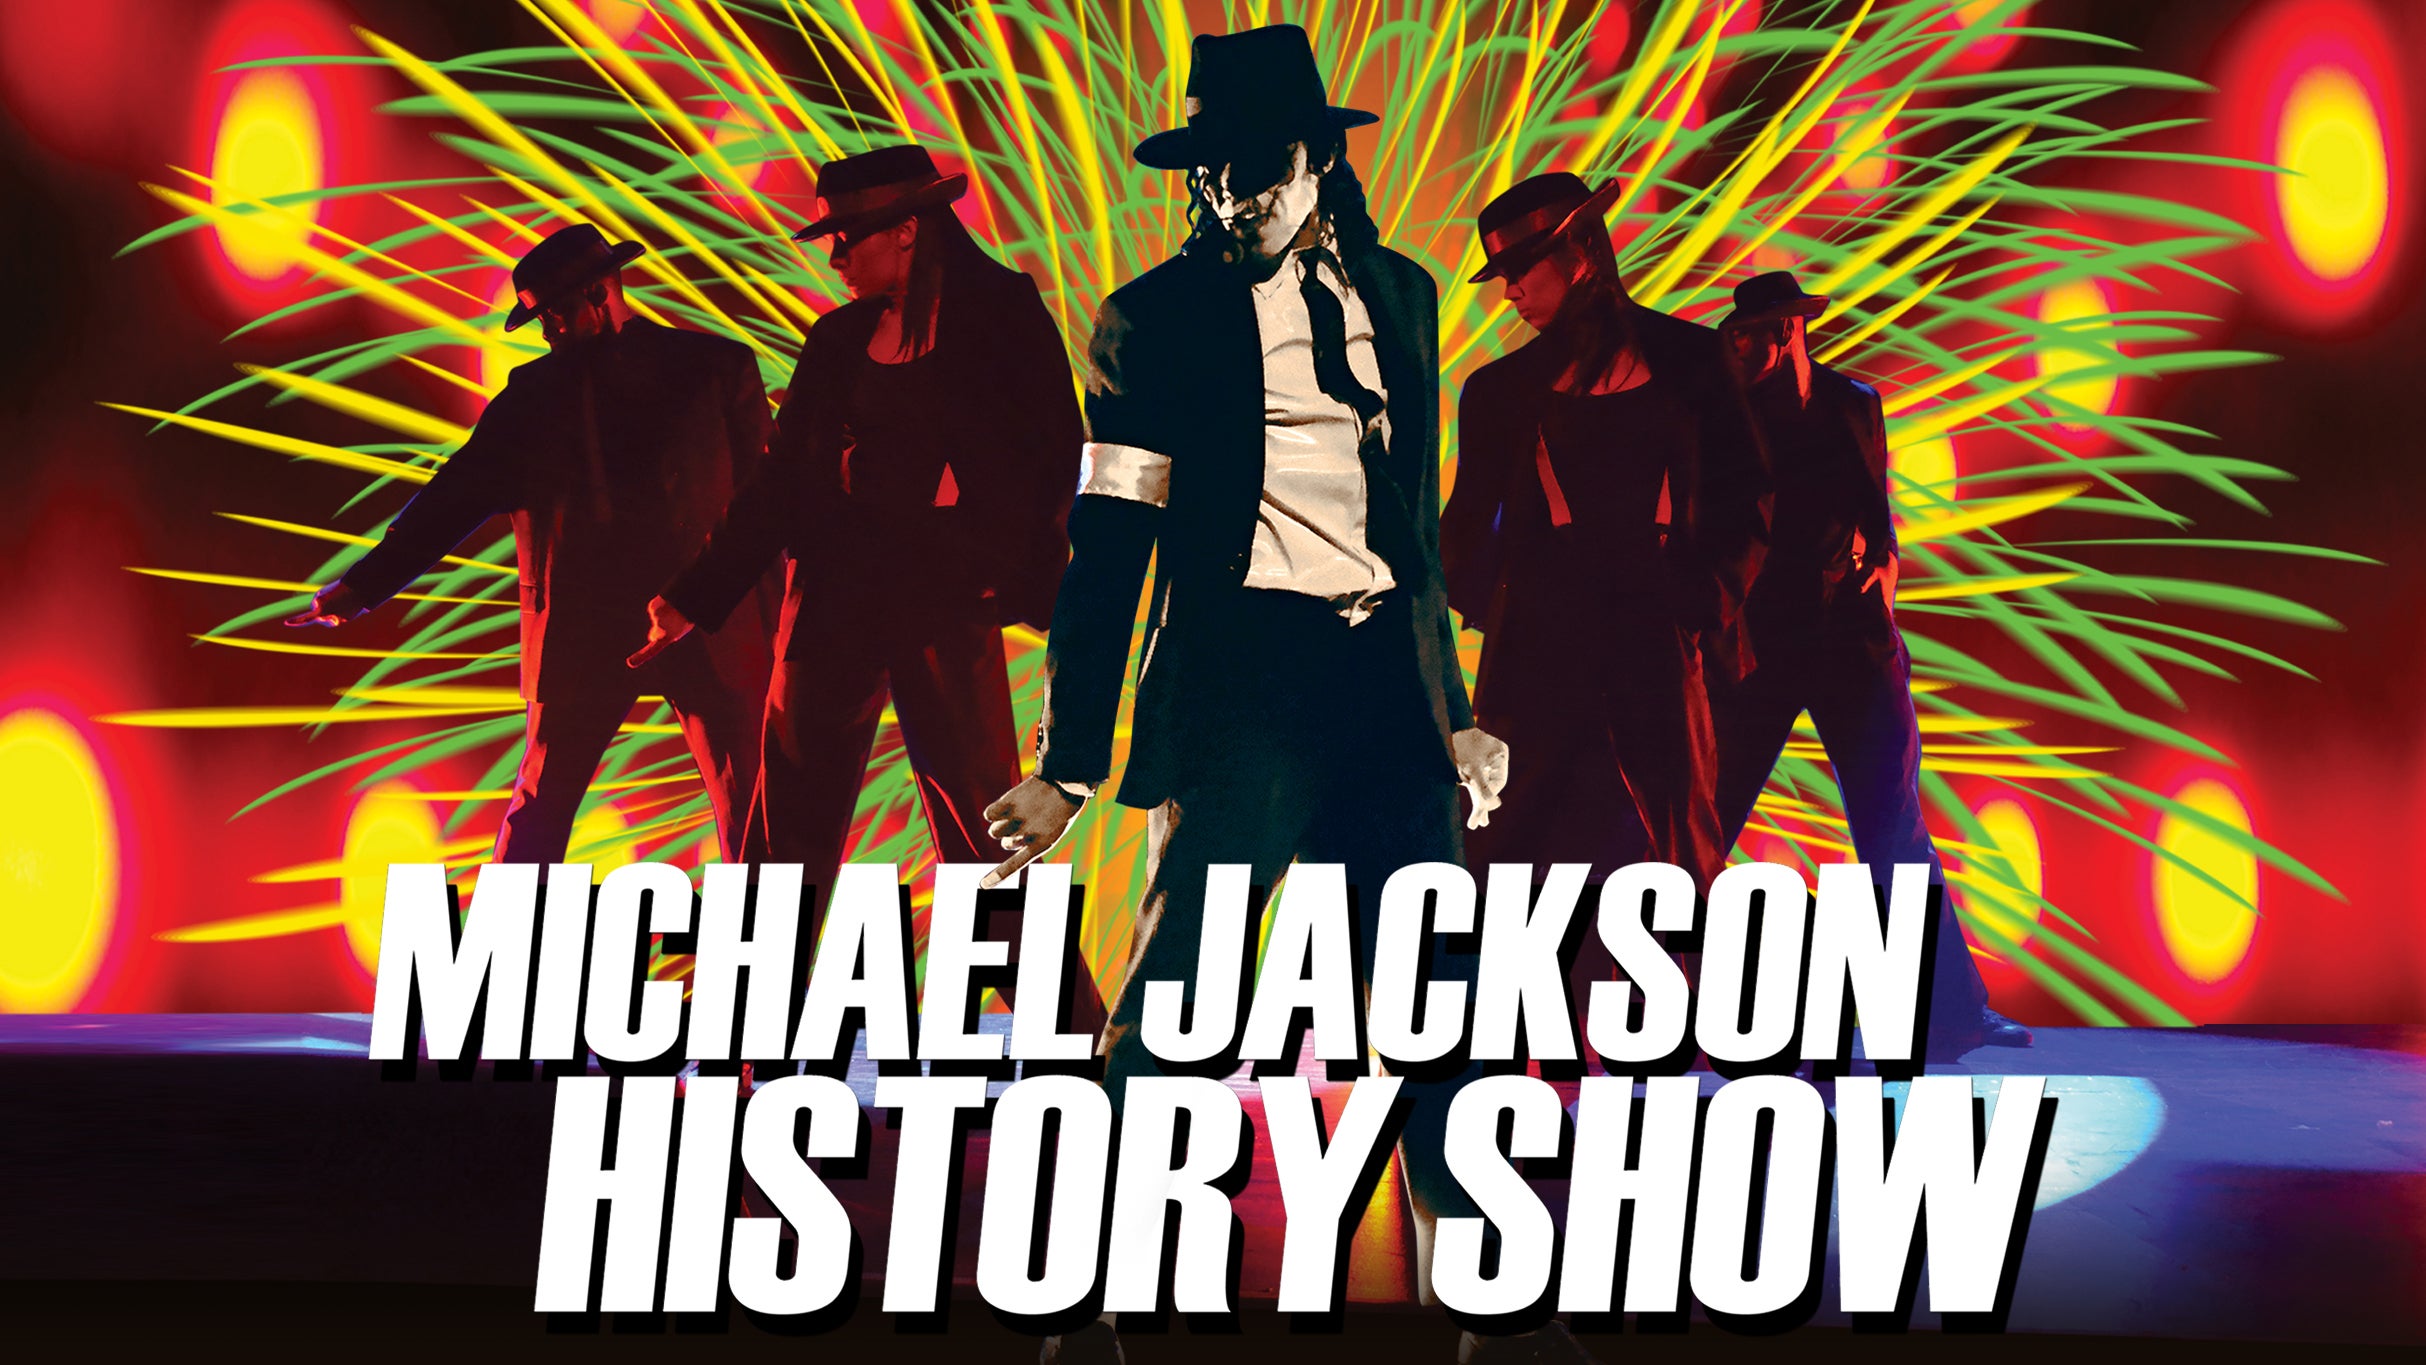 The Michael Jackson HIStory Show presales in Winnipeg